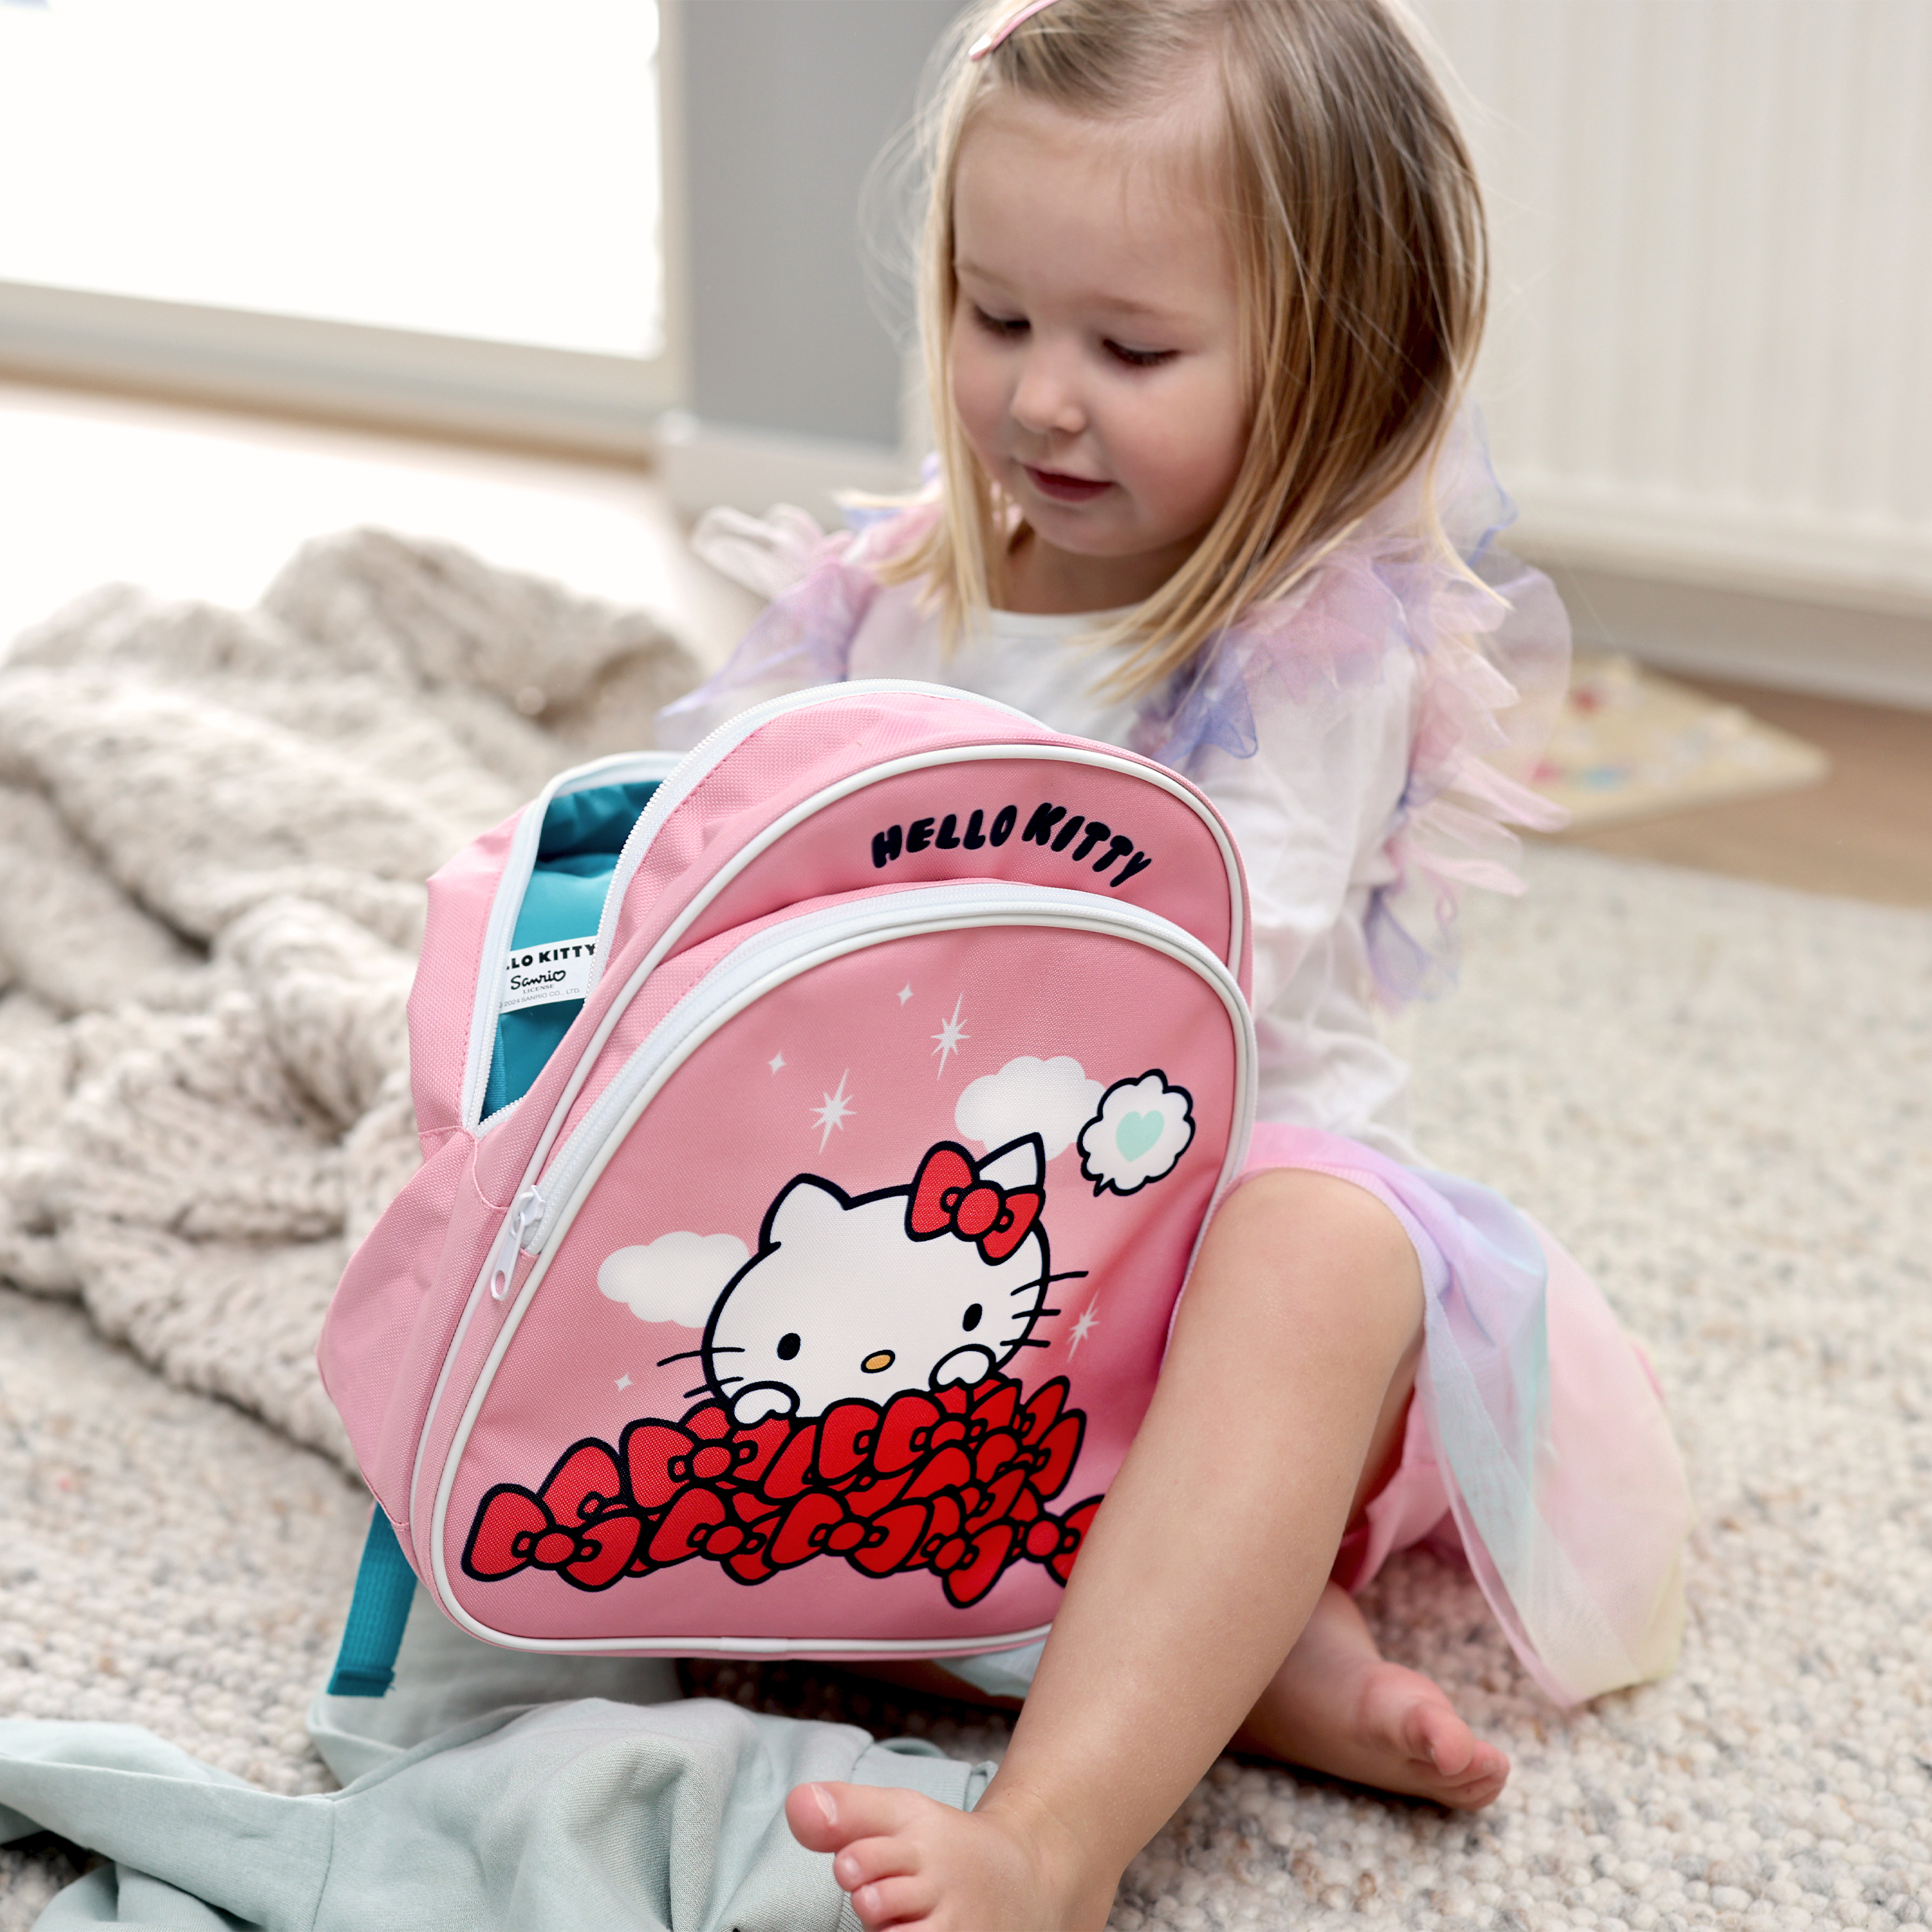 Hello Kitty & Friends hello kitty børnetaske rygsæk